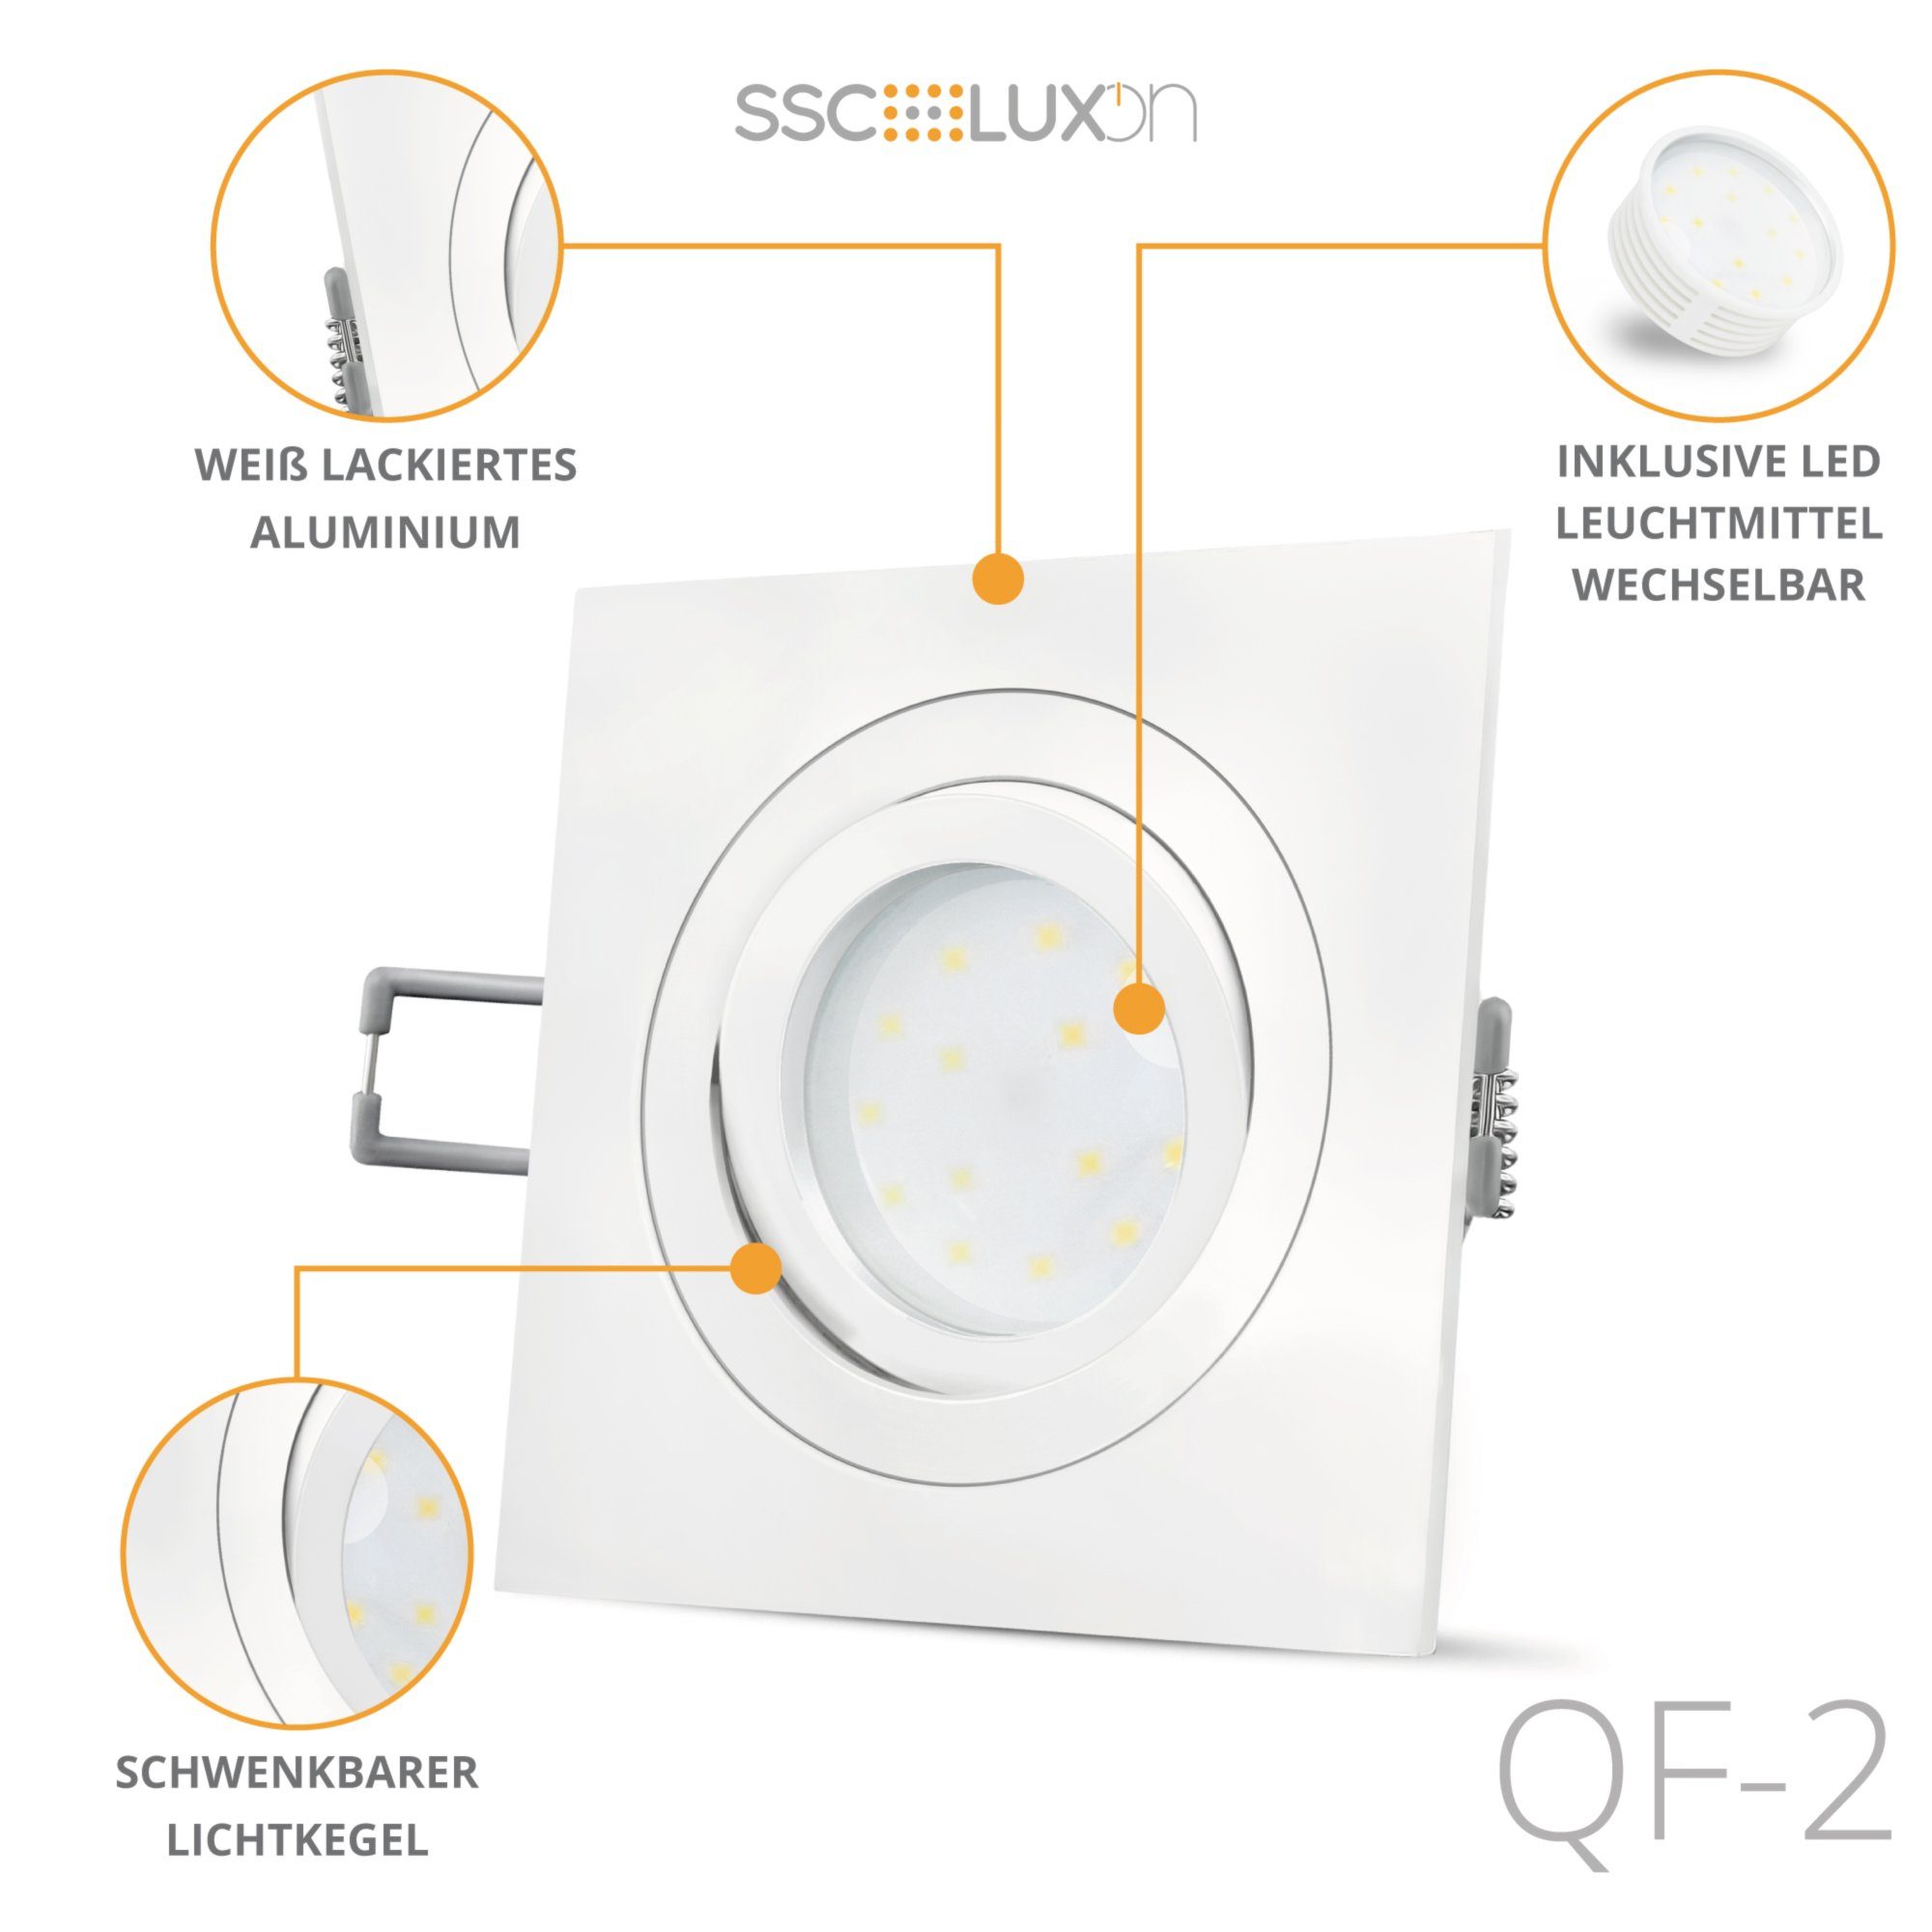 LED Einbauspot 5W, Modul Einbaustrahler Neutralweiß LED QF-2 SSC-LUXon LED & weiss, flach mit schwenkbar